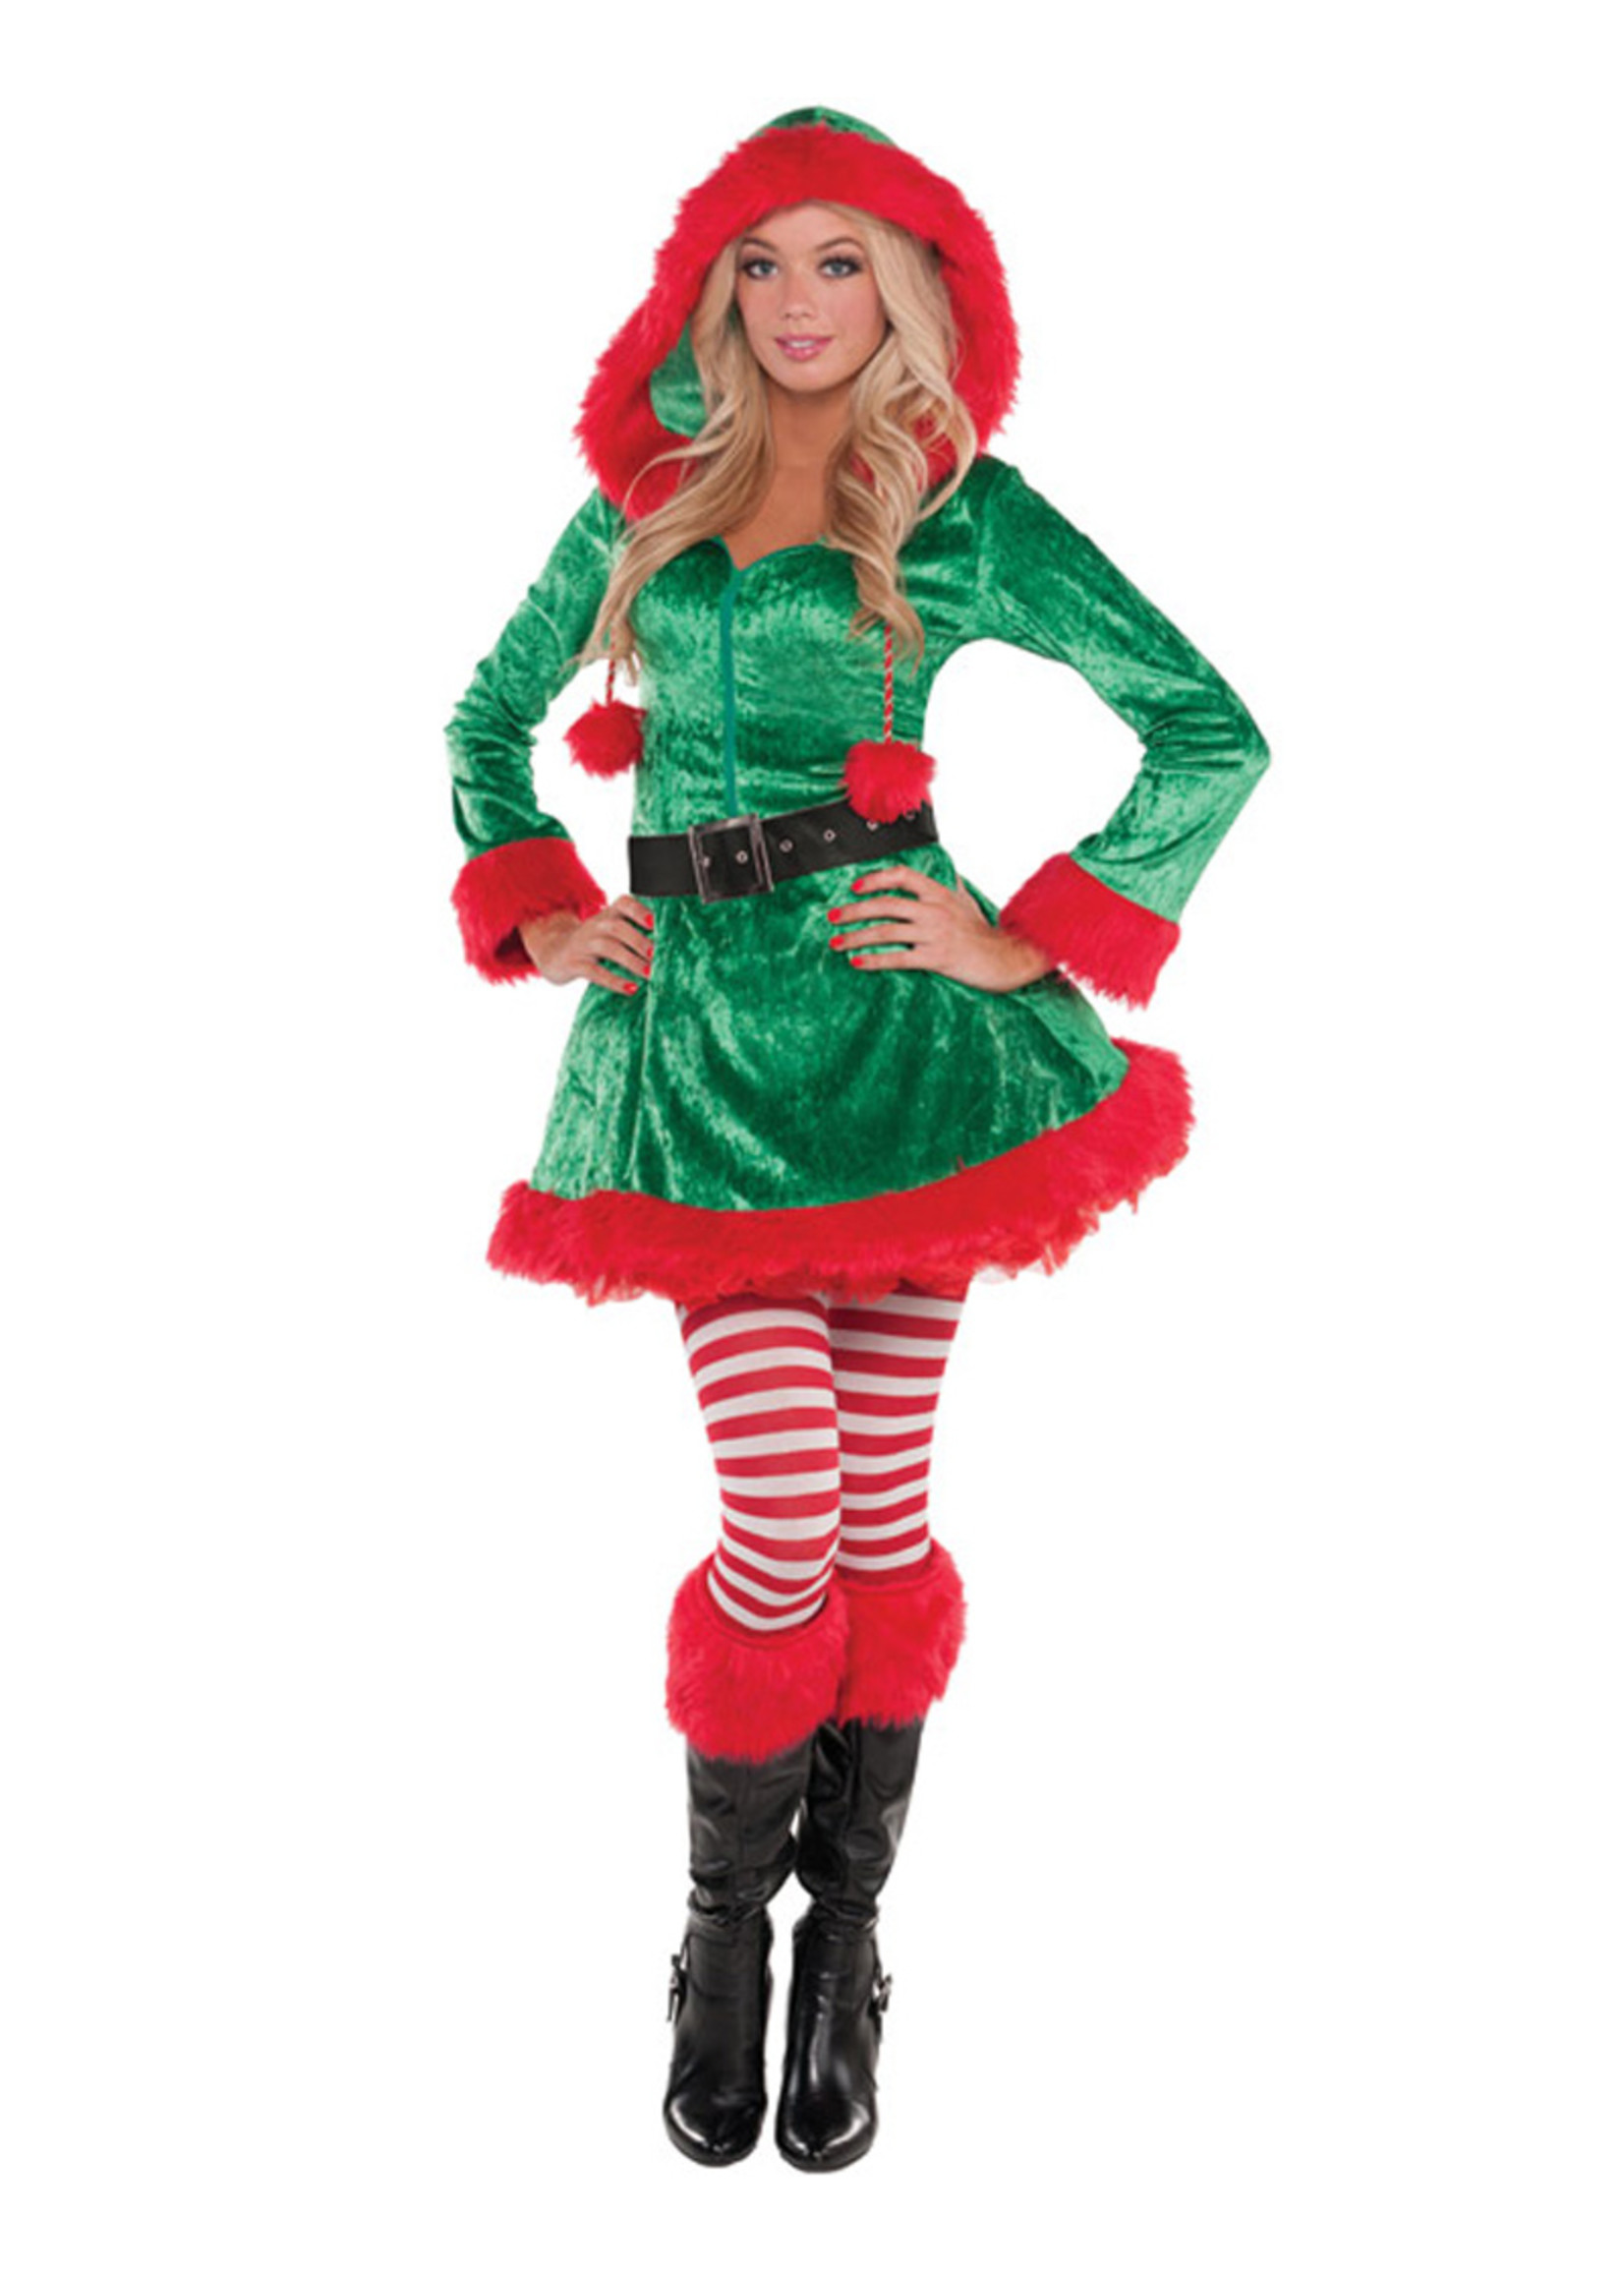 Sassy Elf Costume - Women's